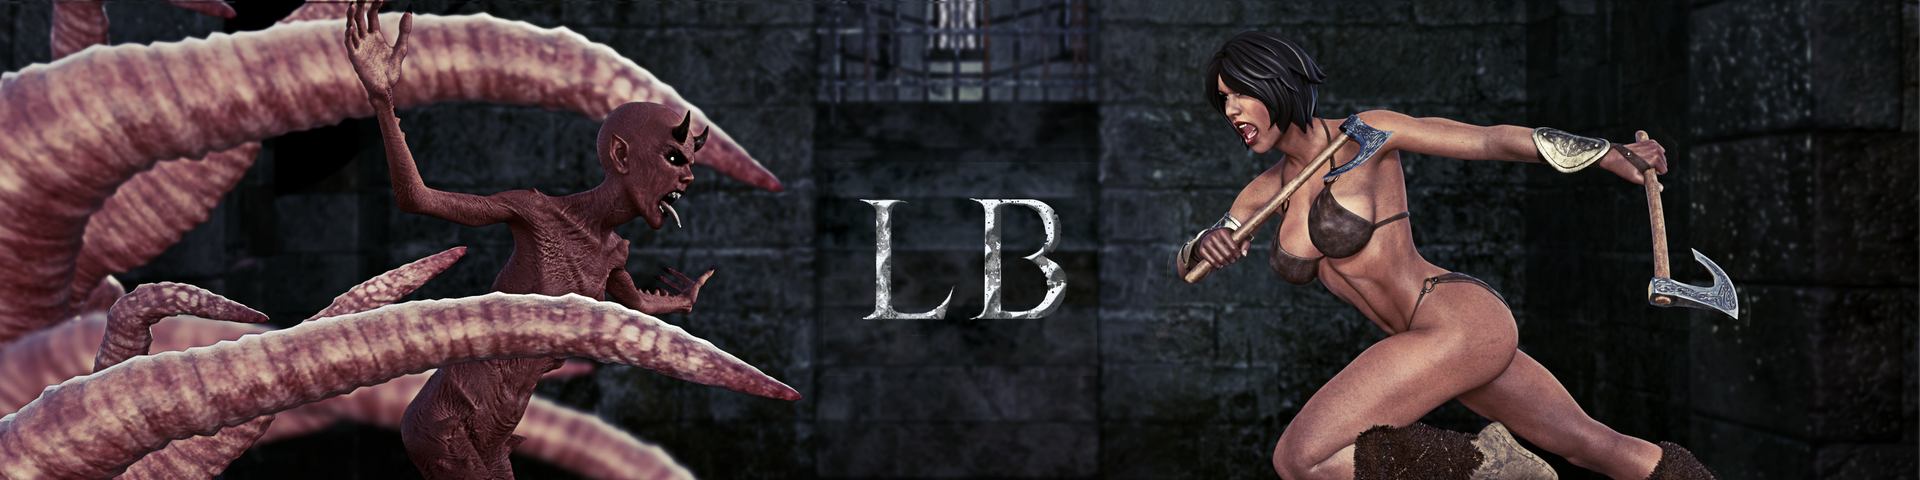 The Last Barbarian [Viktor Black] Adult xxx Game Download